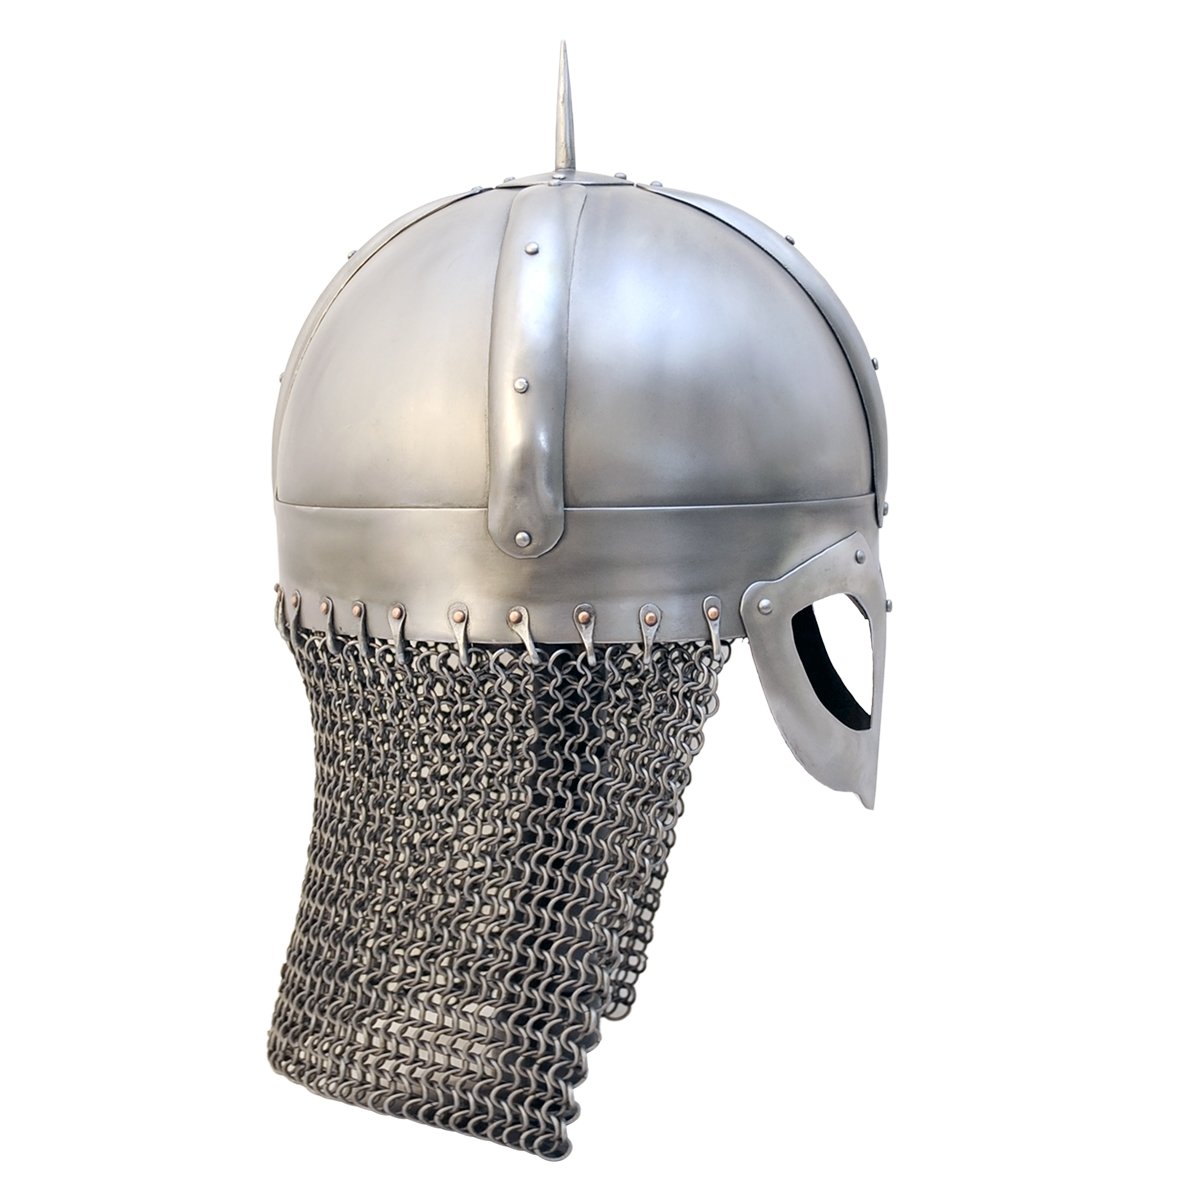 The Gjermundbu helmet-970 AD, Size M